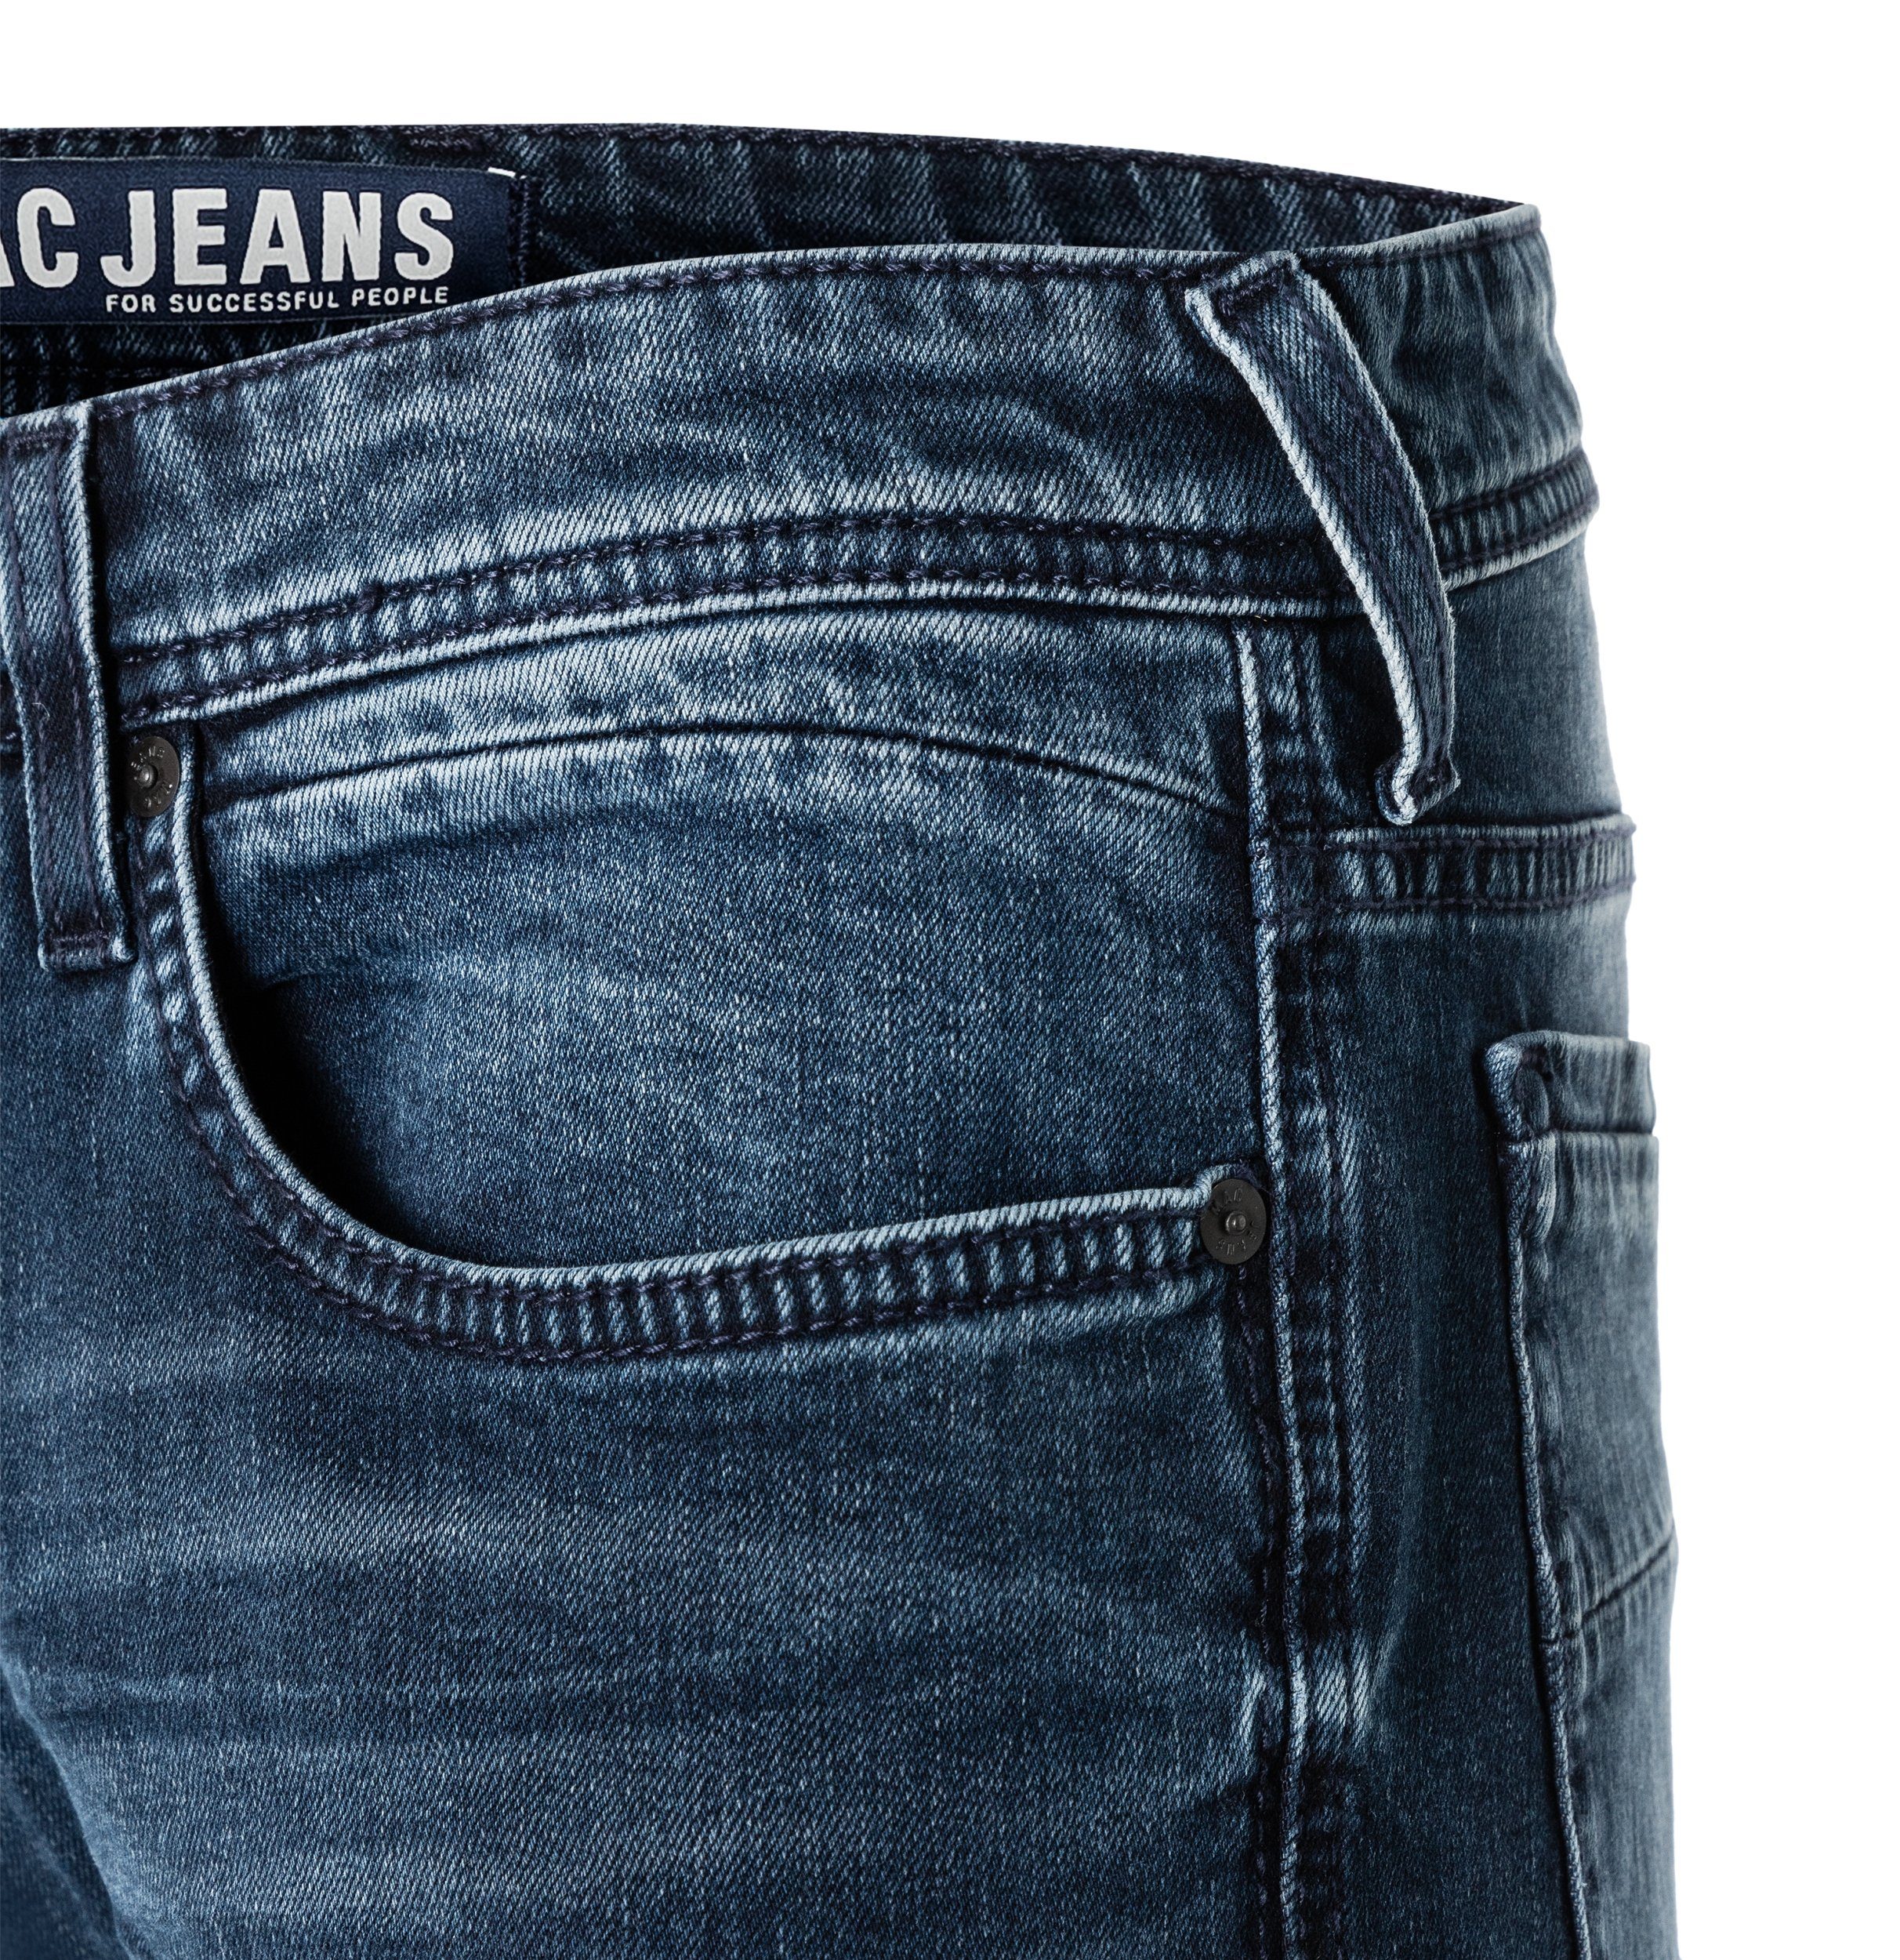 Ben used black authentic blue MAC 5-Pocket-Jeans